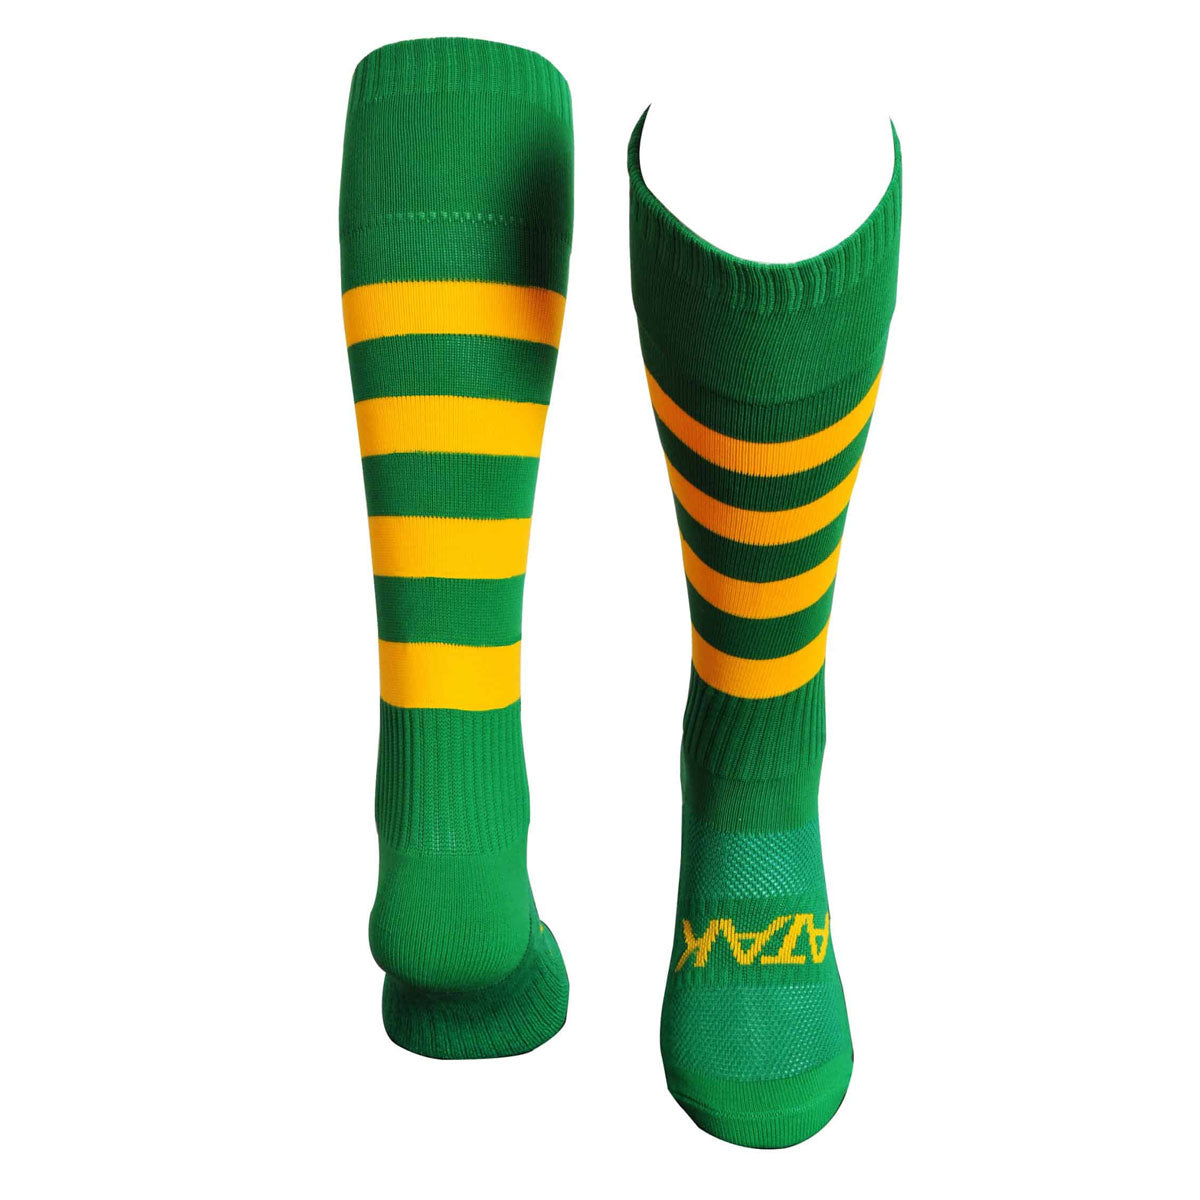 Atak Hooped Sports Socks - Youth - Green/Gold